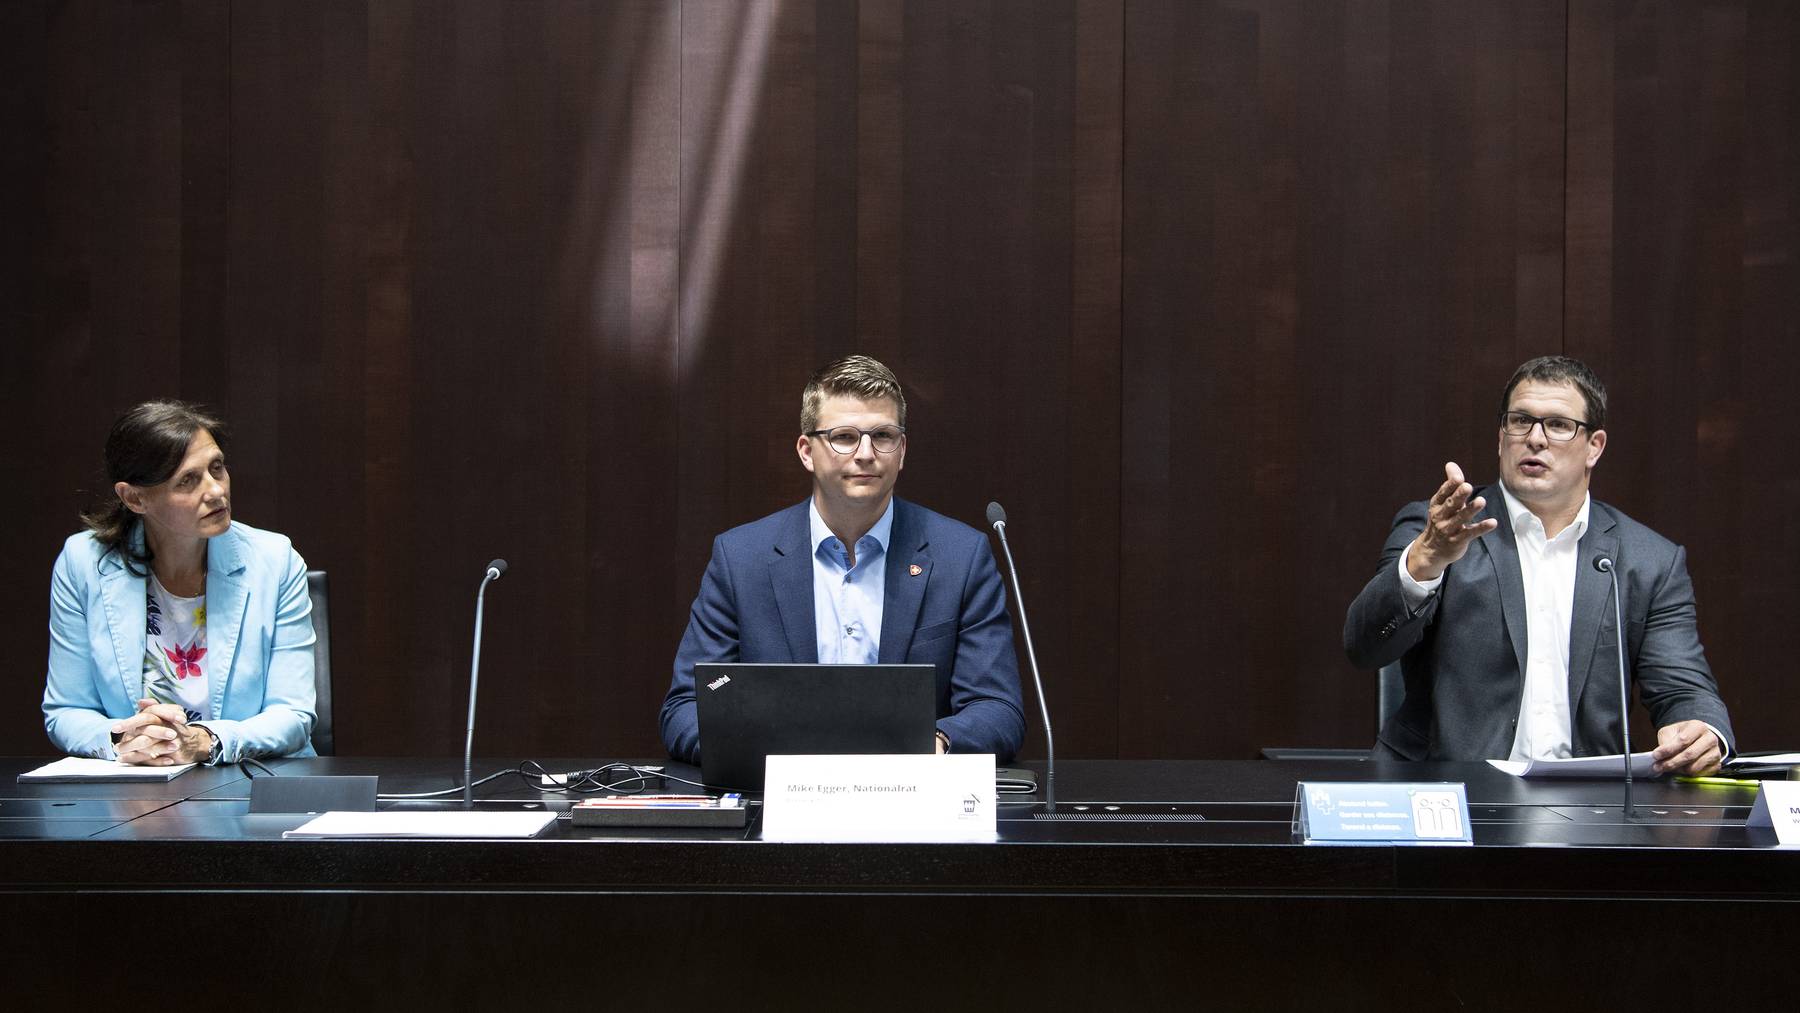 Die SVP-Nationalräte Monika Rüegger, Mike Egger und Manuel Strupler (v.l.) gehören dem Referendumskomitee gegen die Überbrückungsrente an.